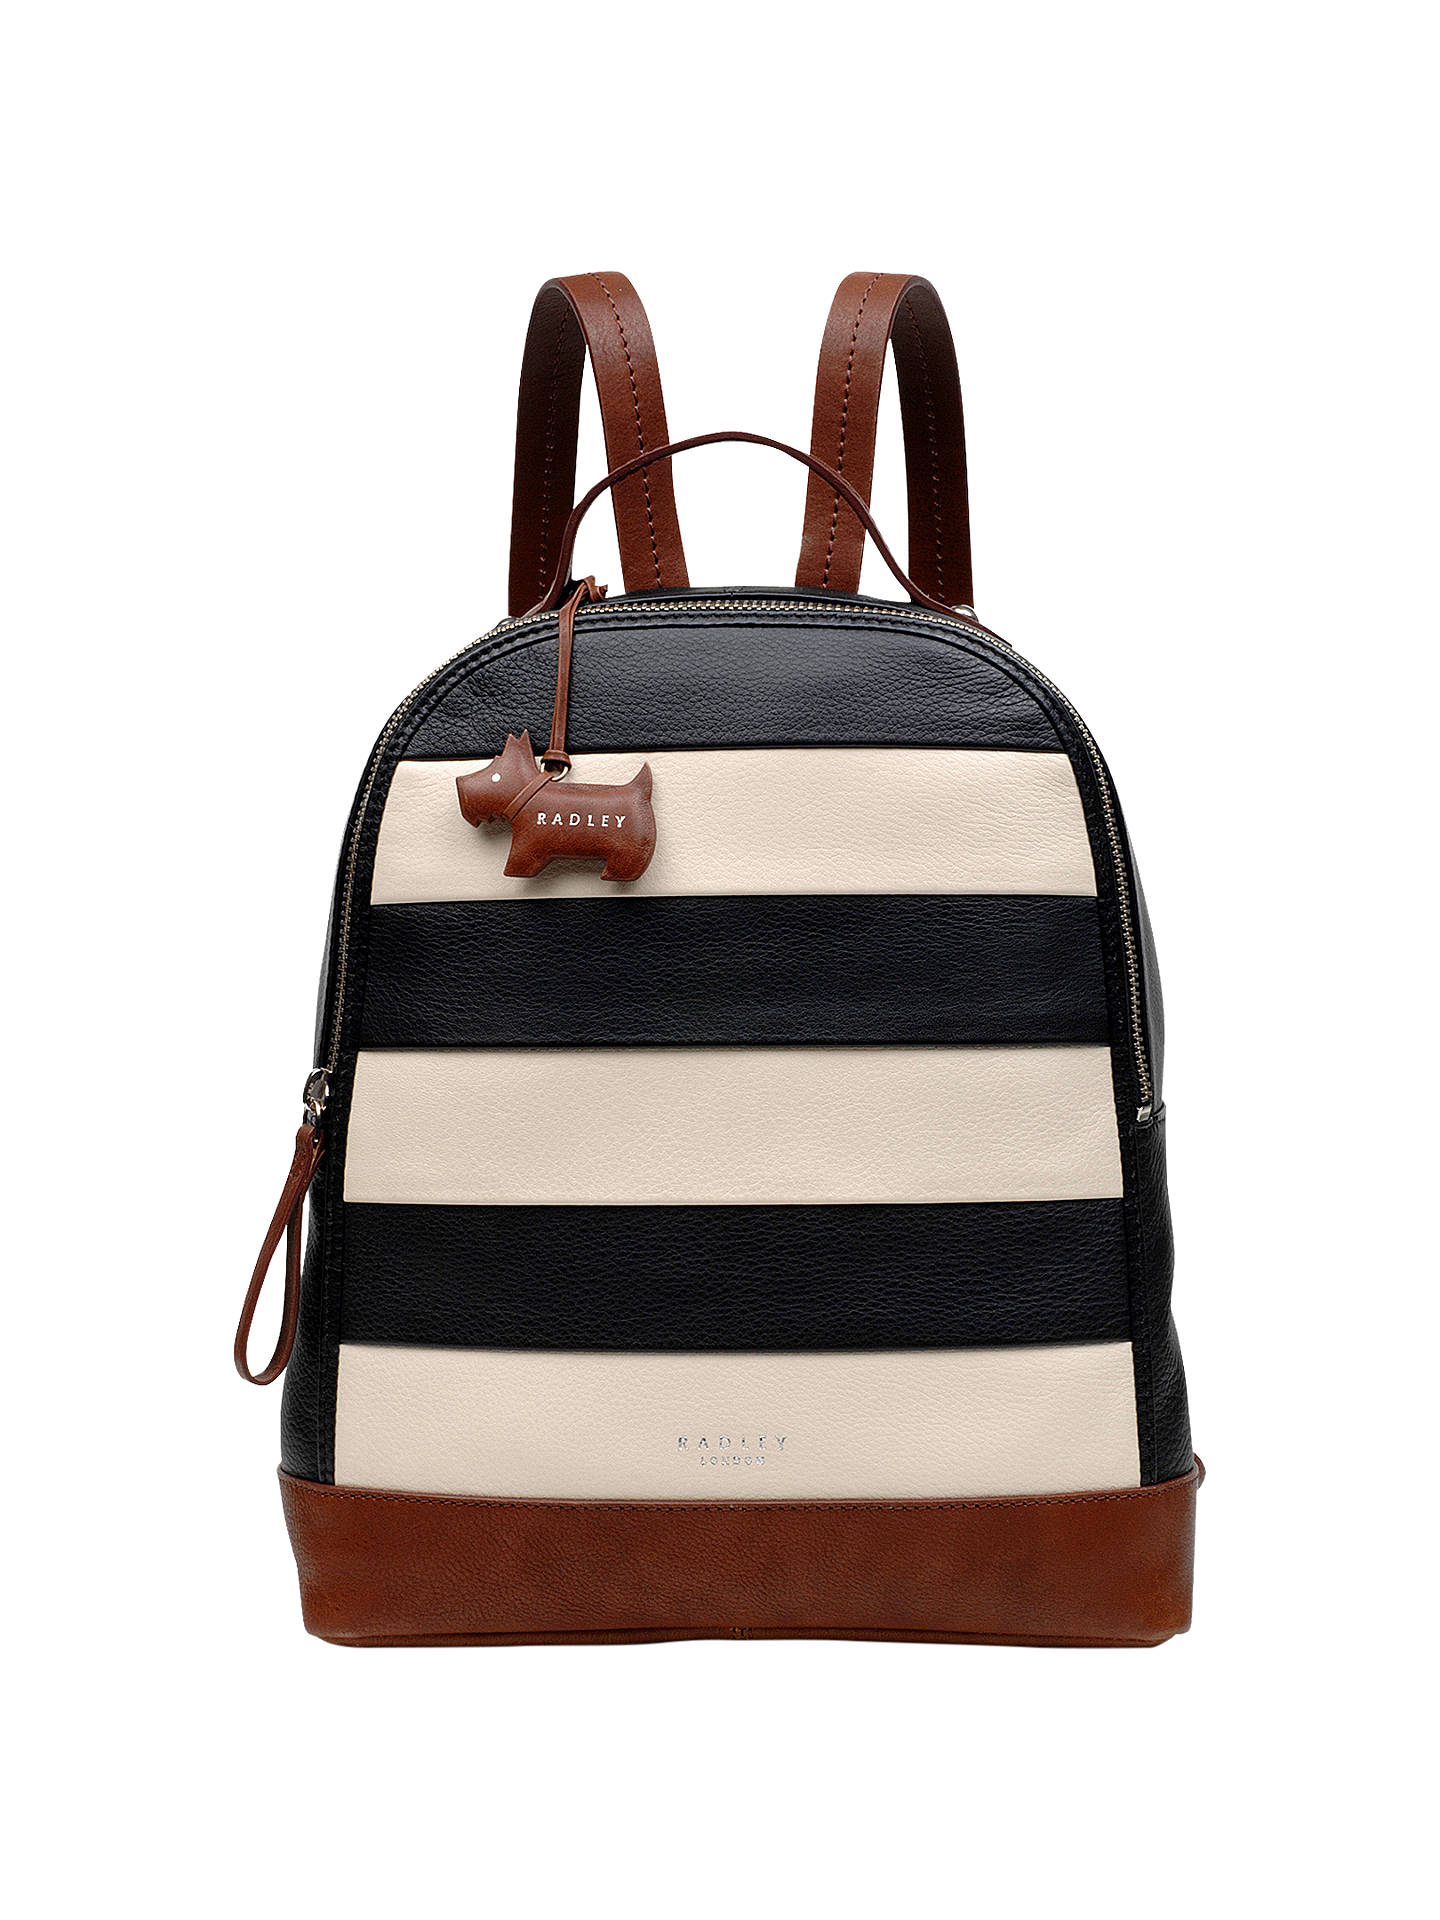 Radley Stripe Leather Backpack, Black/Cream at John Lewis & Partners